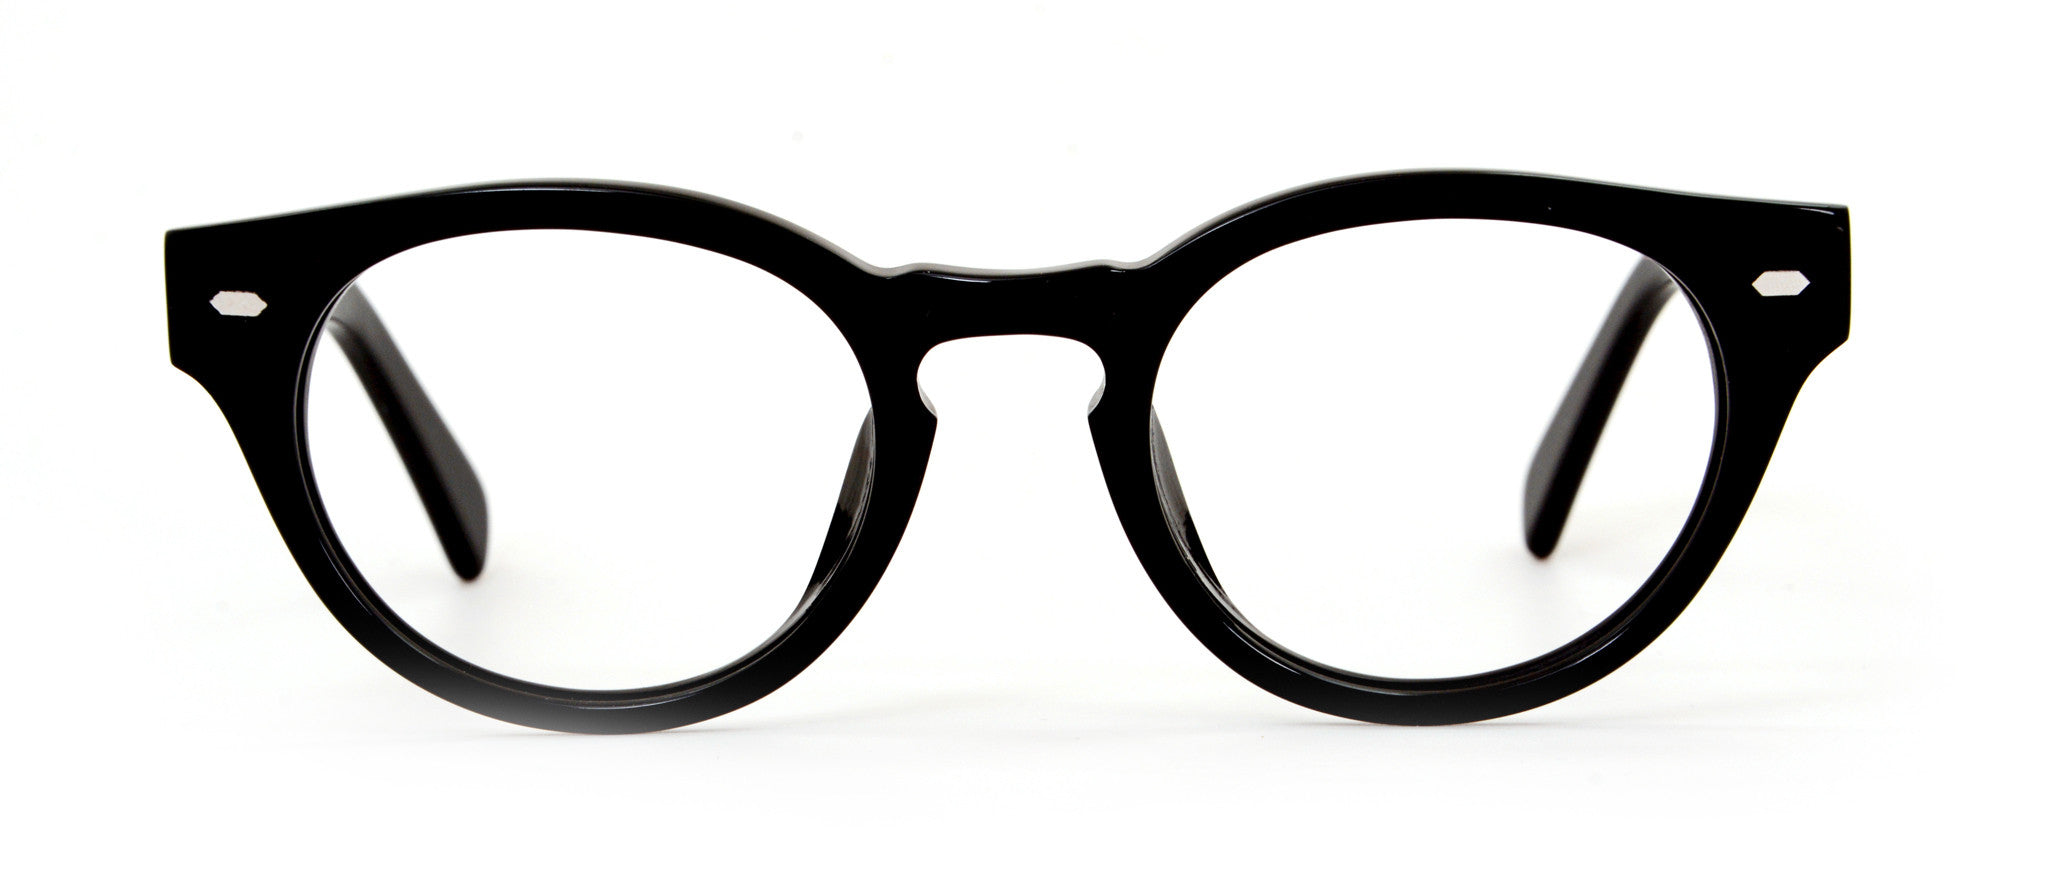 Glasses Prescription | Sunglasses Round Circle & Frames Eyeglasses